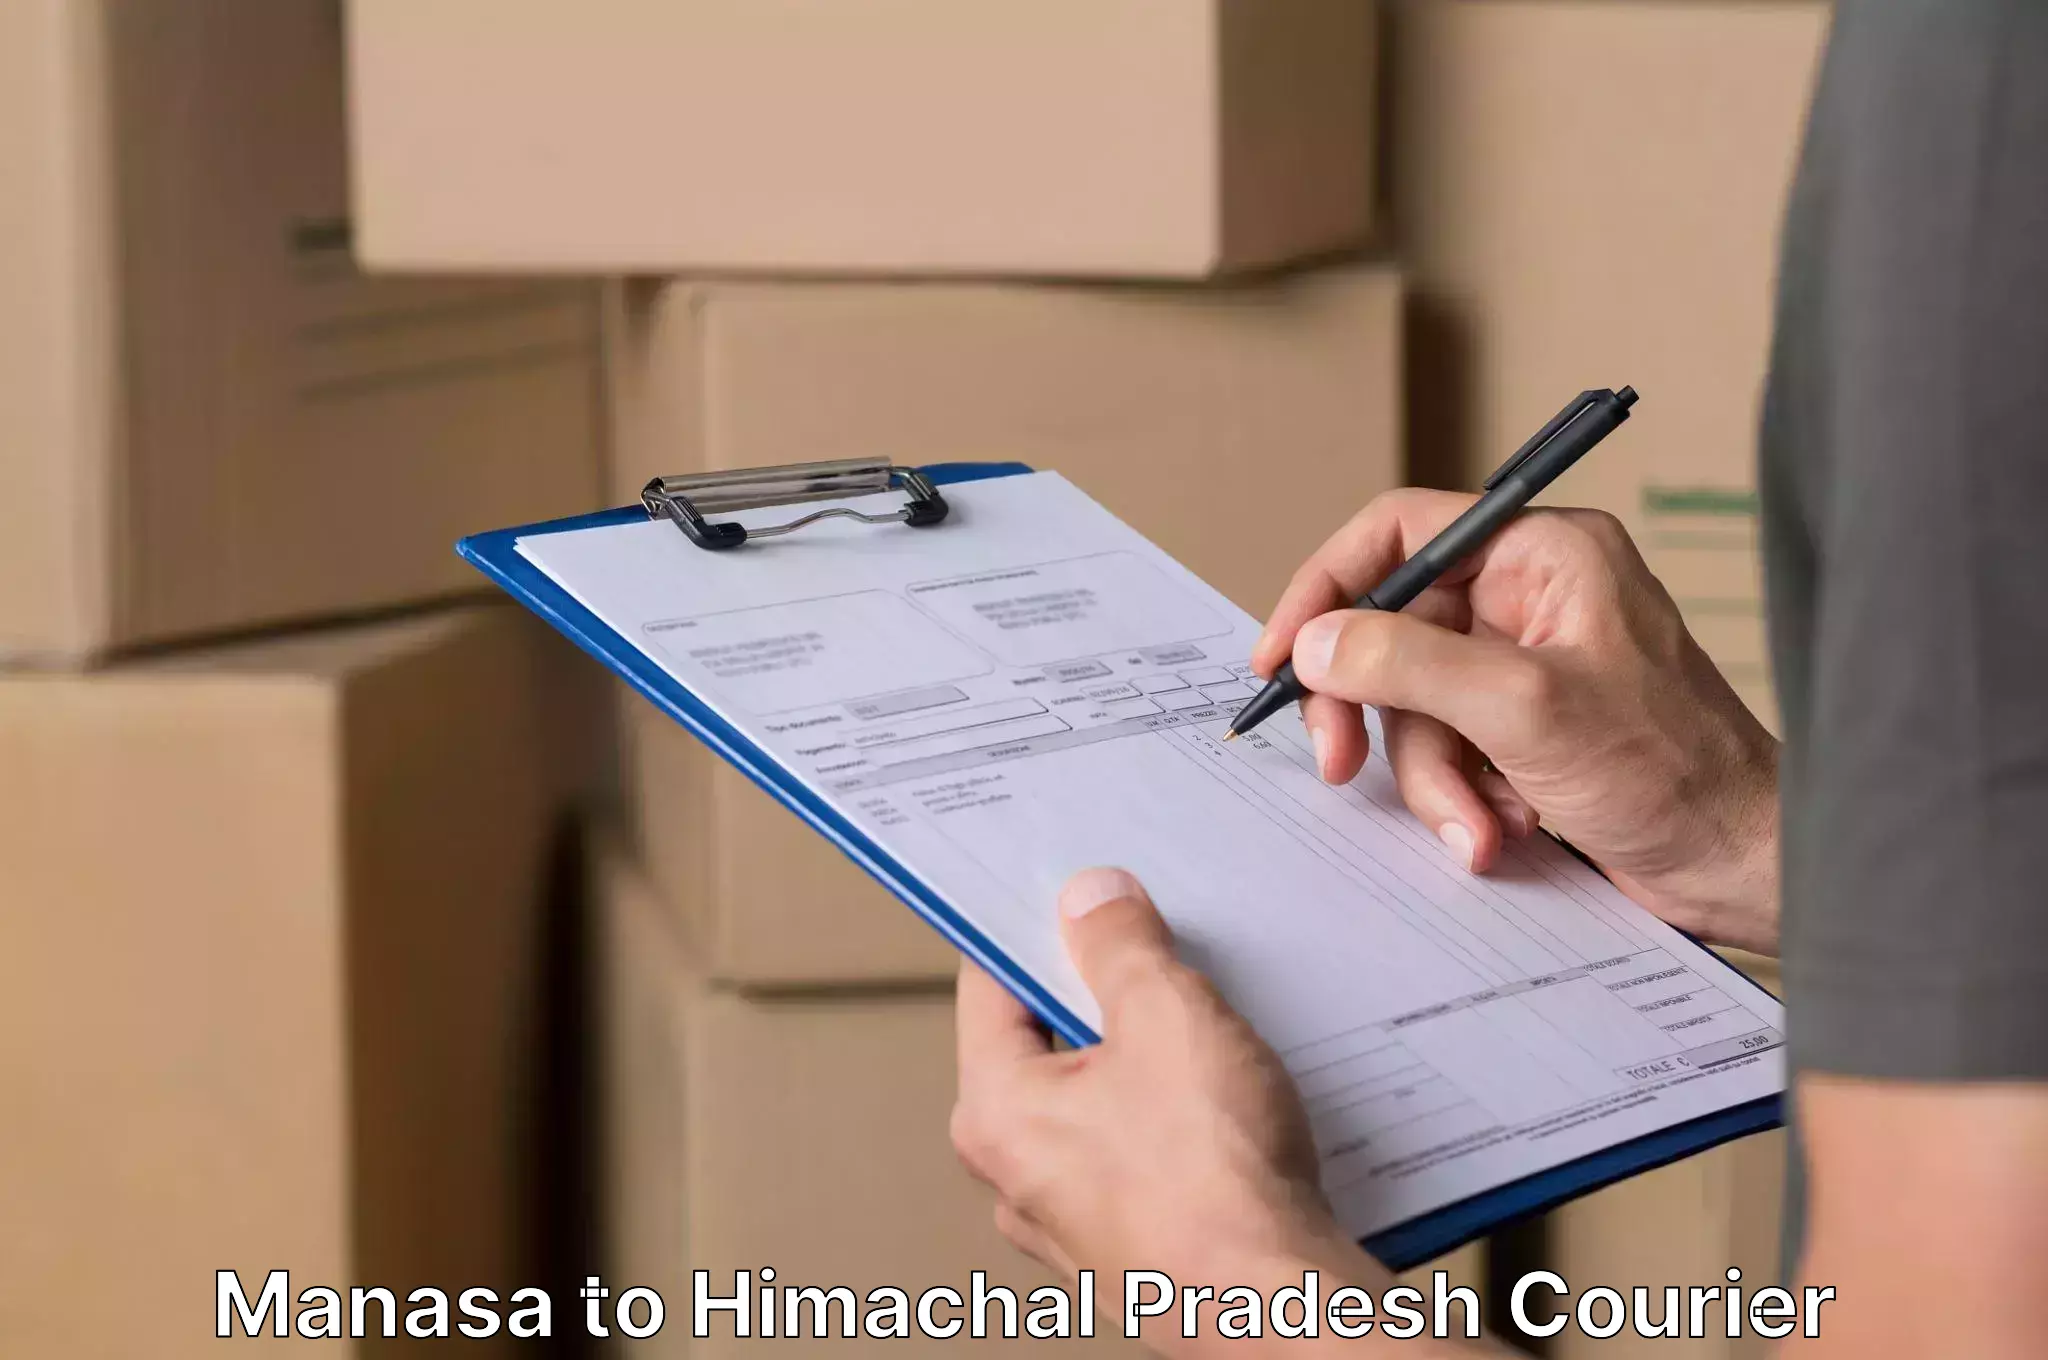 Professional moving company Manasa to Himachal Pradesh